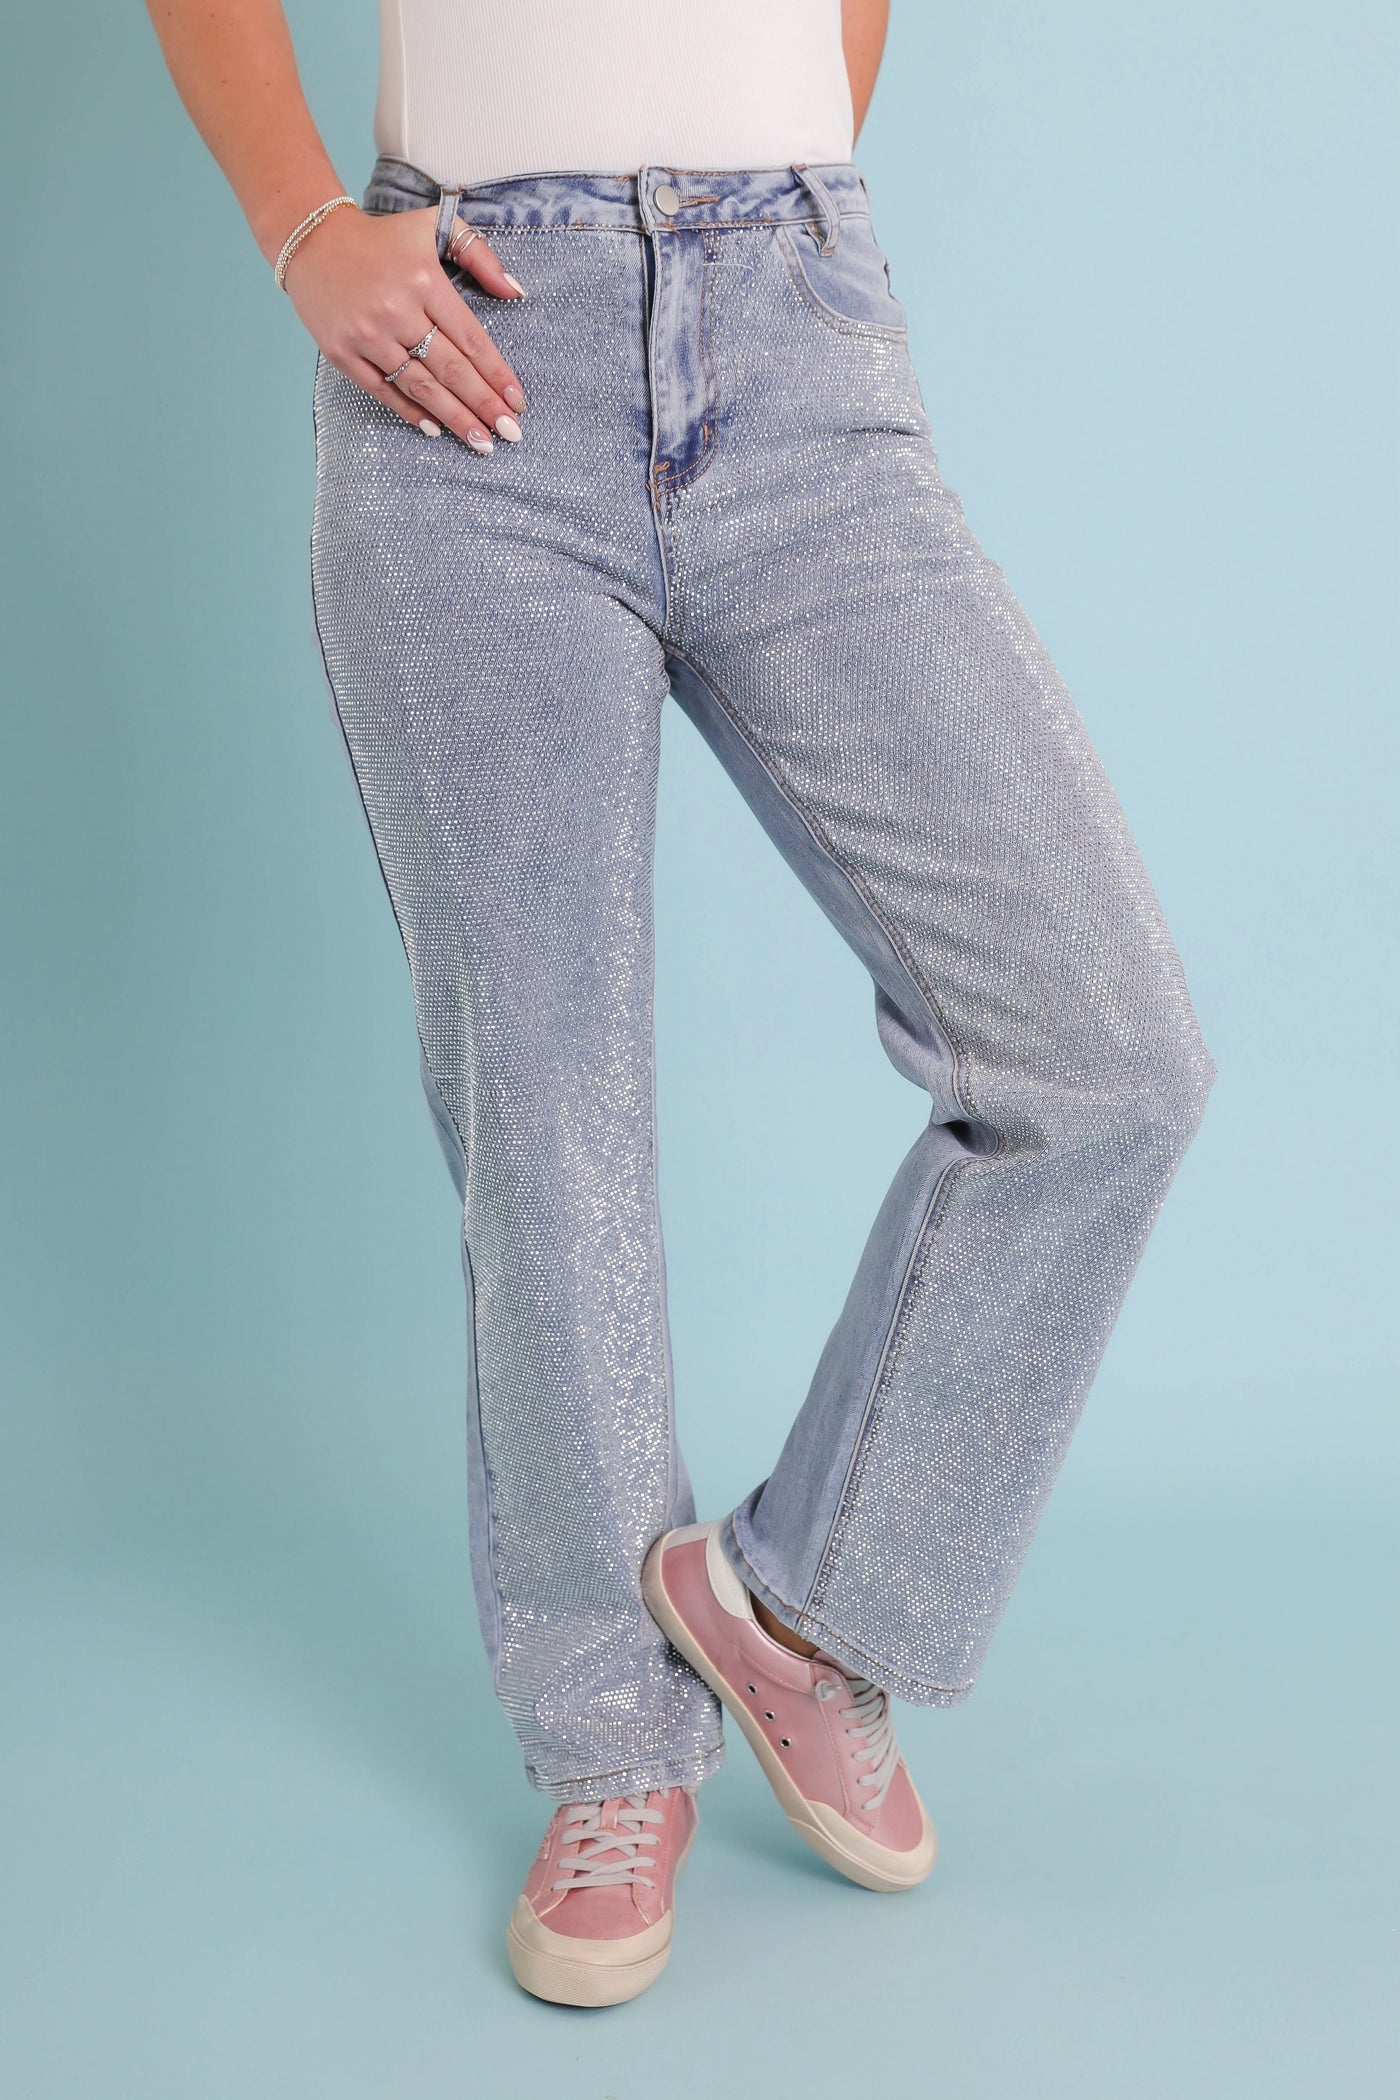 Light Wash Rhinestone Jeans- Women's Sequin Jeans- BlueB Jeans